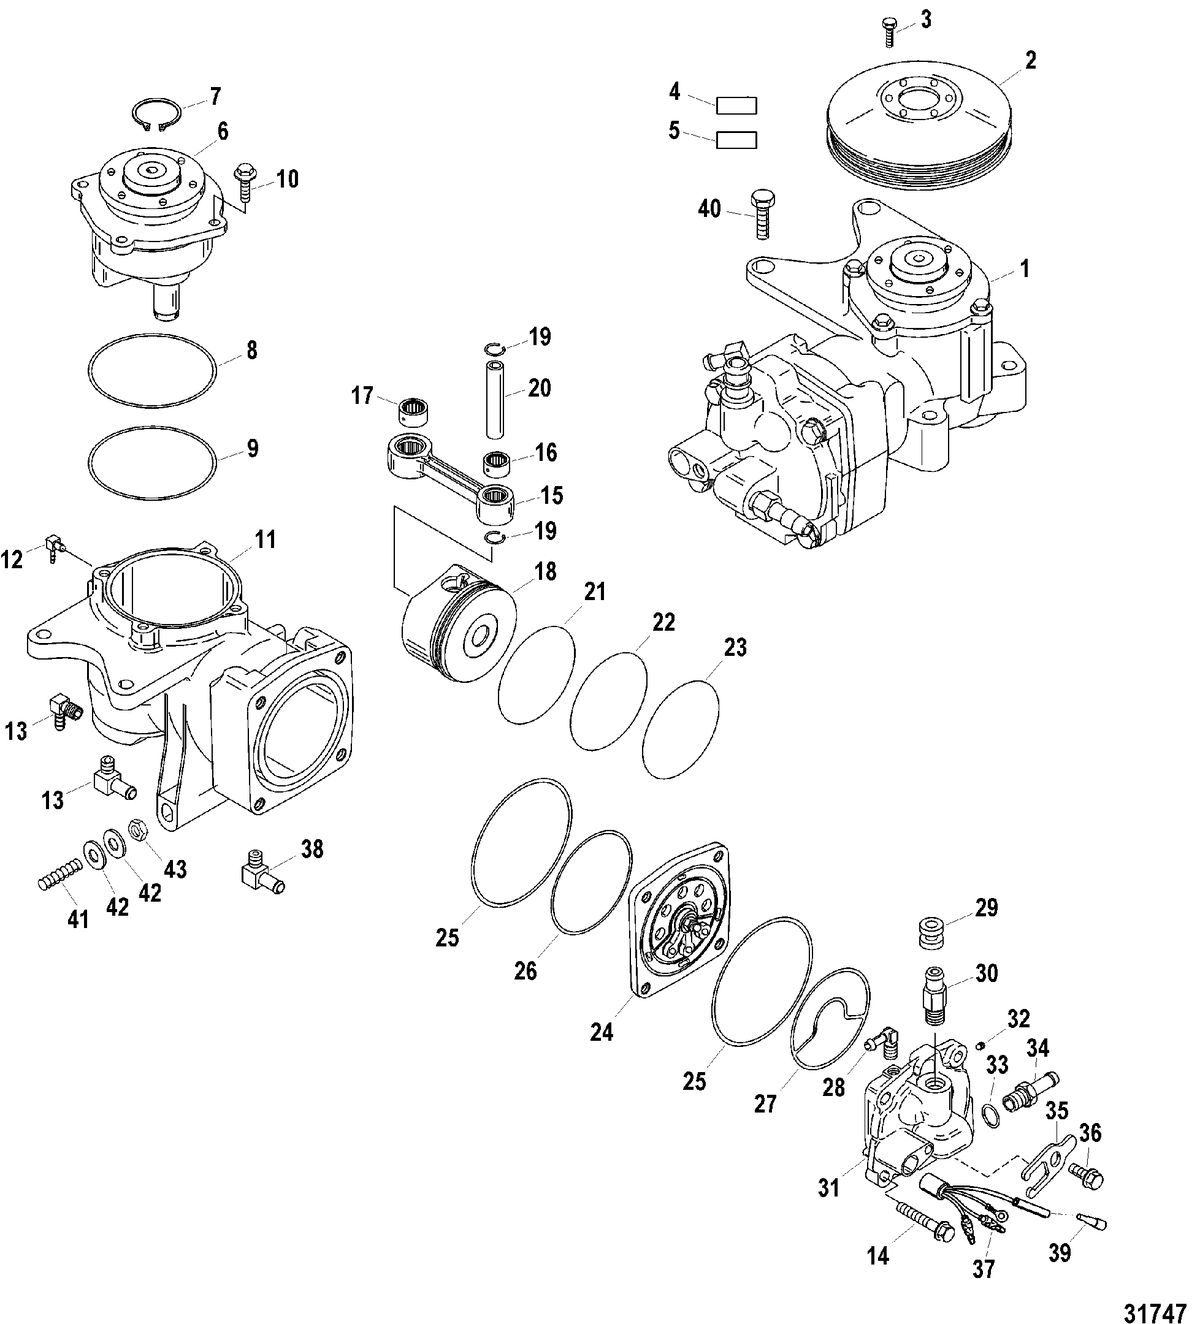 SPORTJET 200 DFI M2 JET DRIVE Air Compressor Components(Design II)